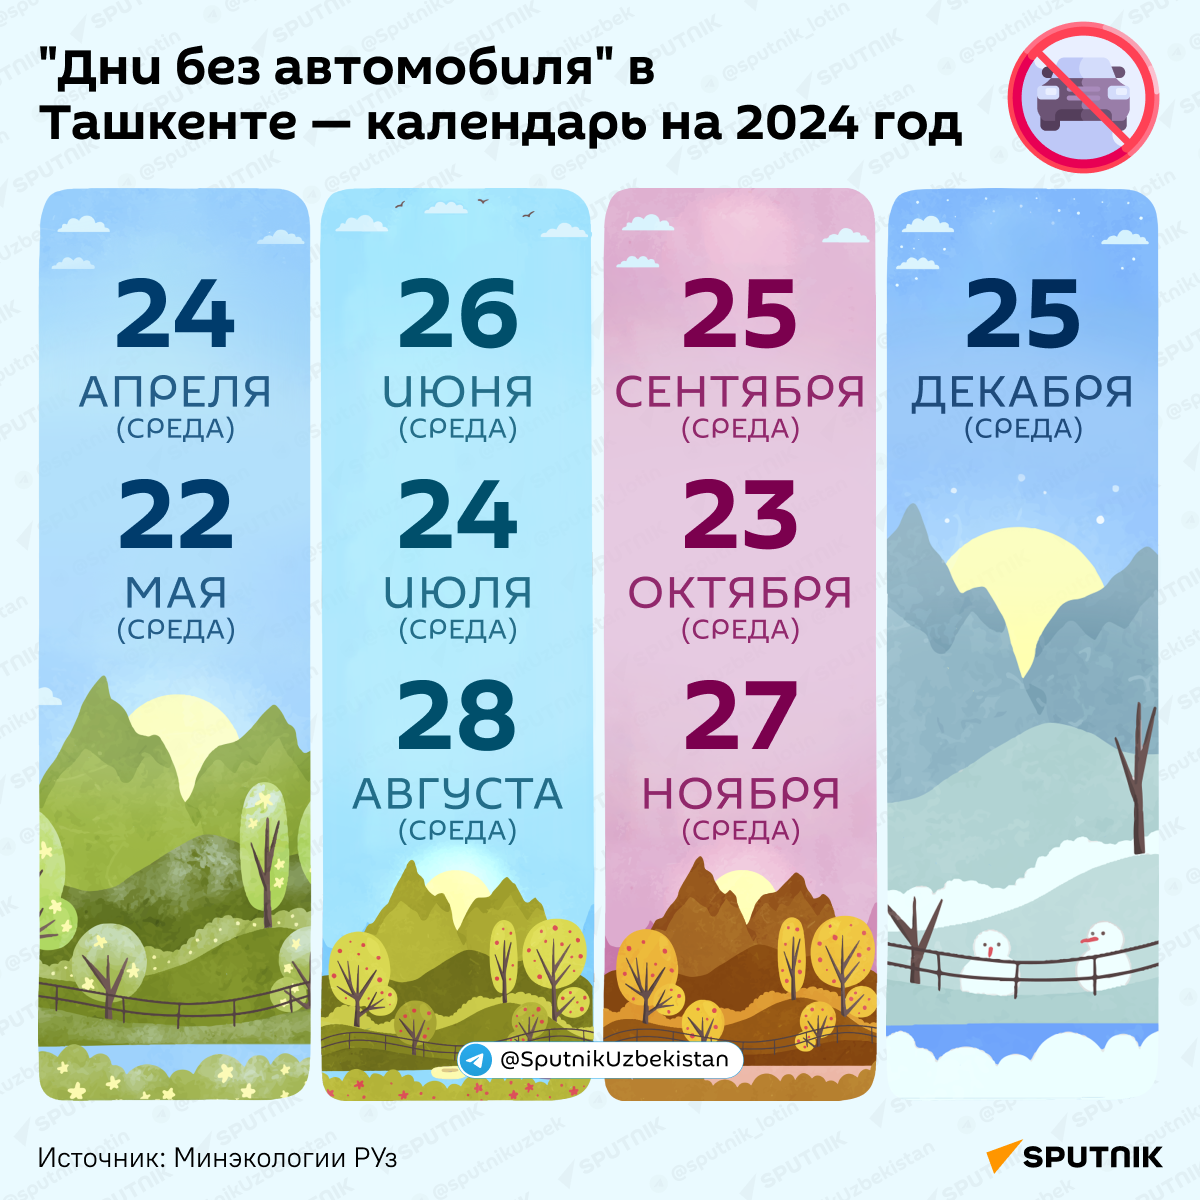 Дни без автомобиля в Ташкенте — календарь на 2024 год - Sputnik Узбекистан